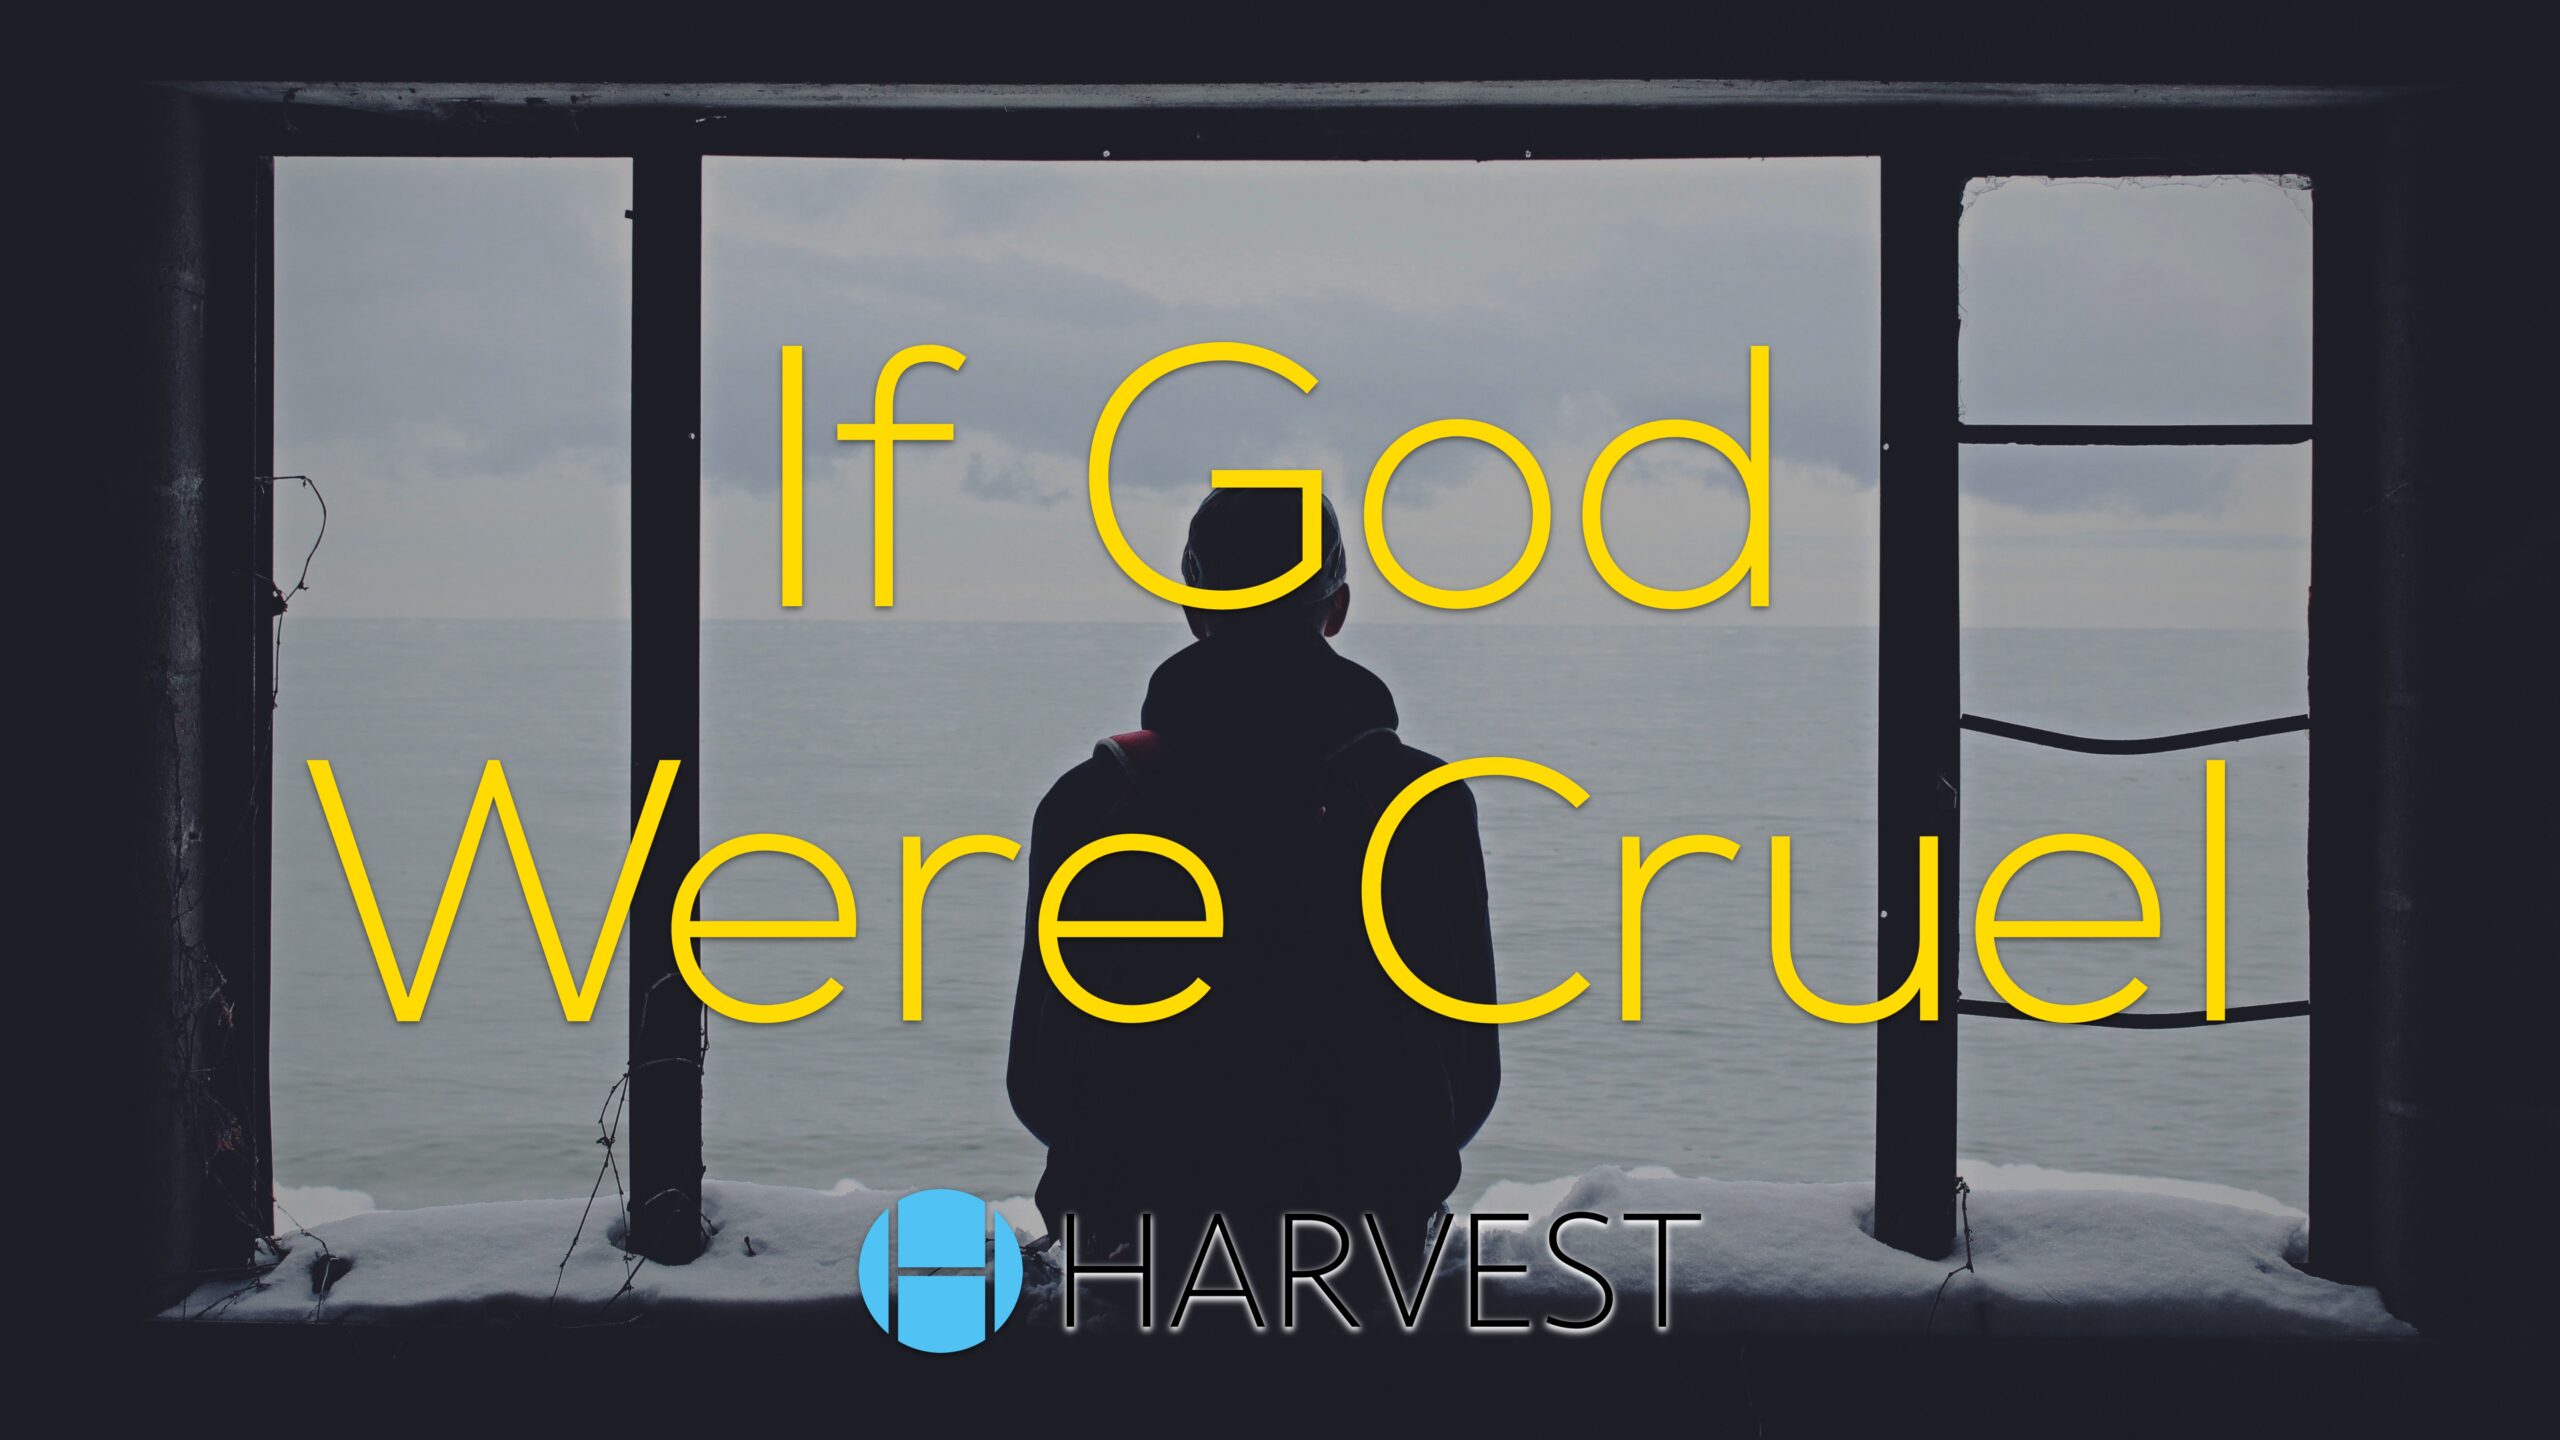 If God Were Cruel